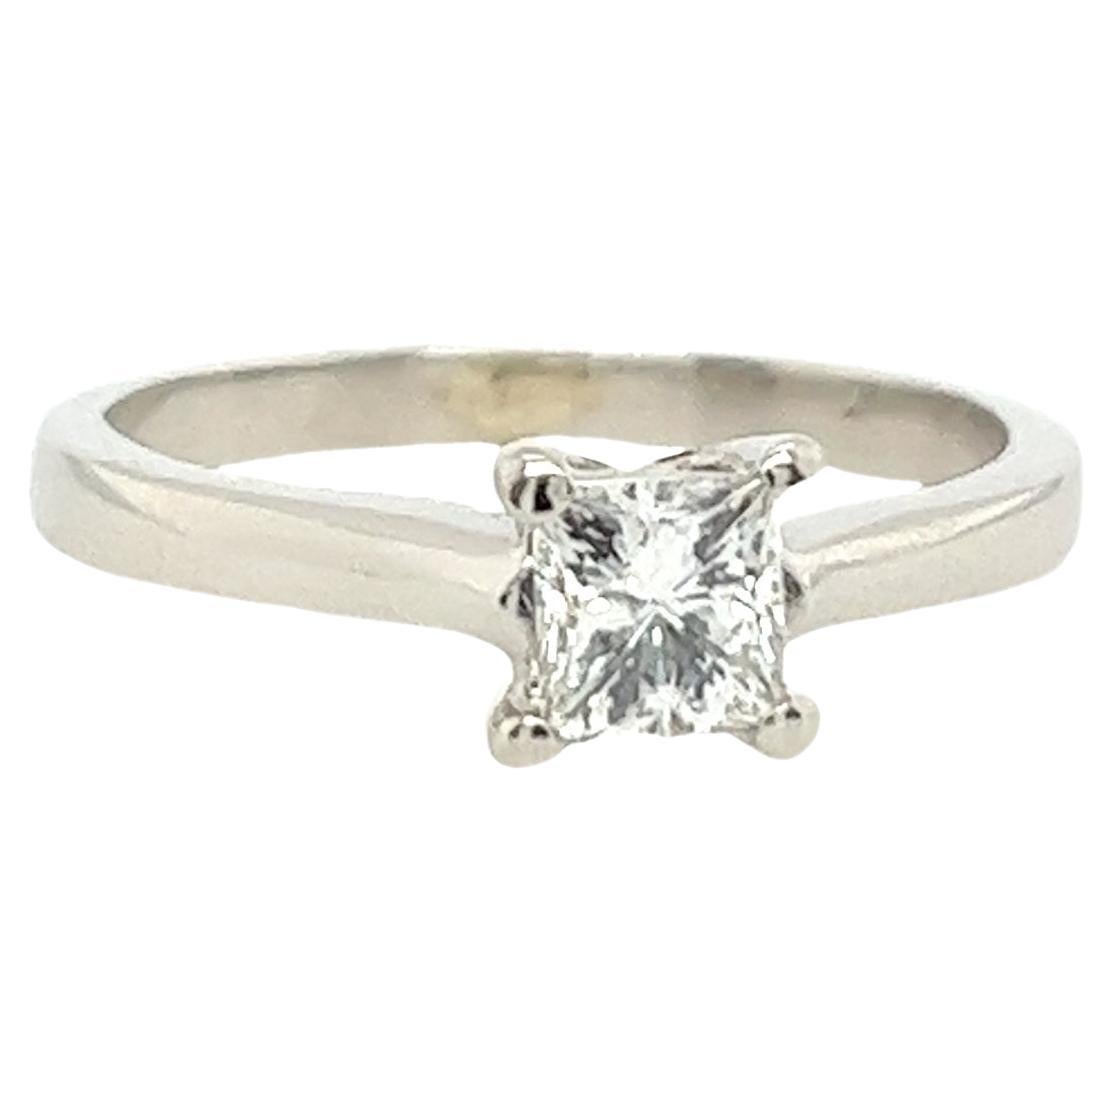 18ct White Gold Solitaire Diamond Ring Set With 0.45ct Princess Cut Diamond